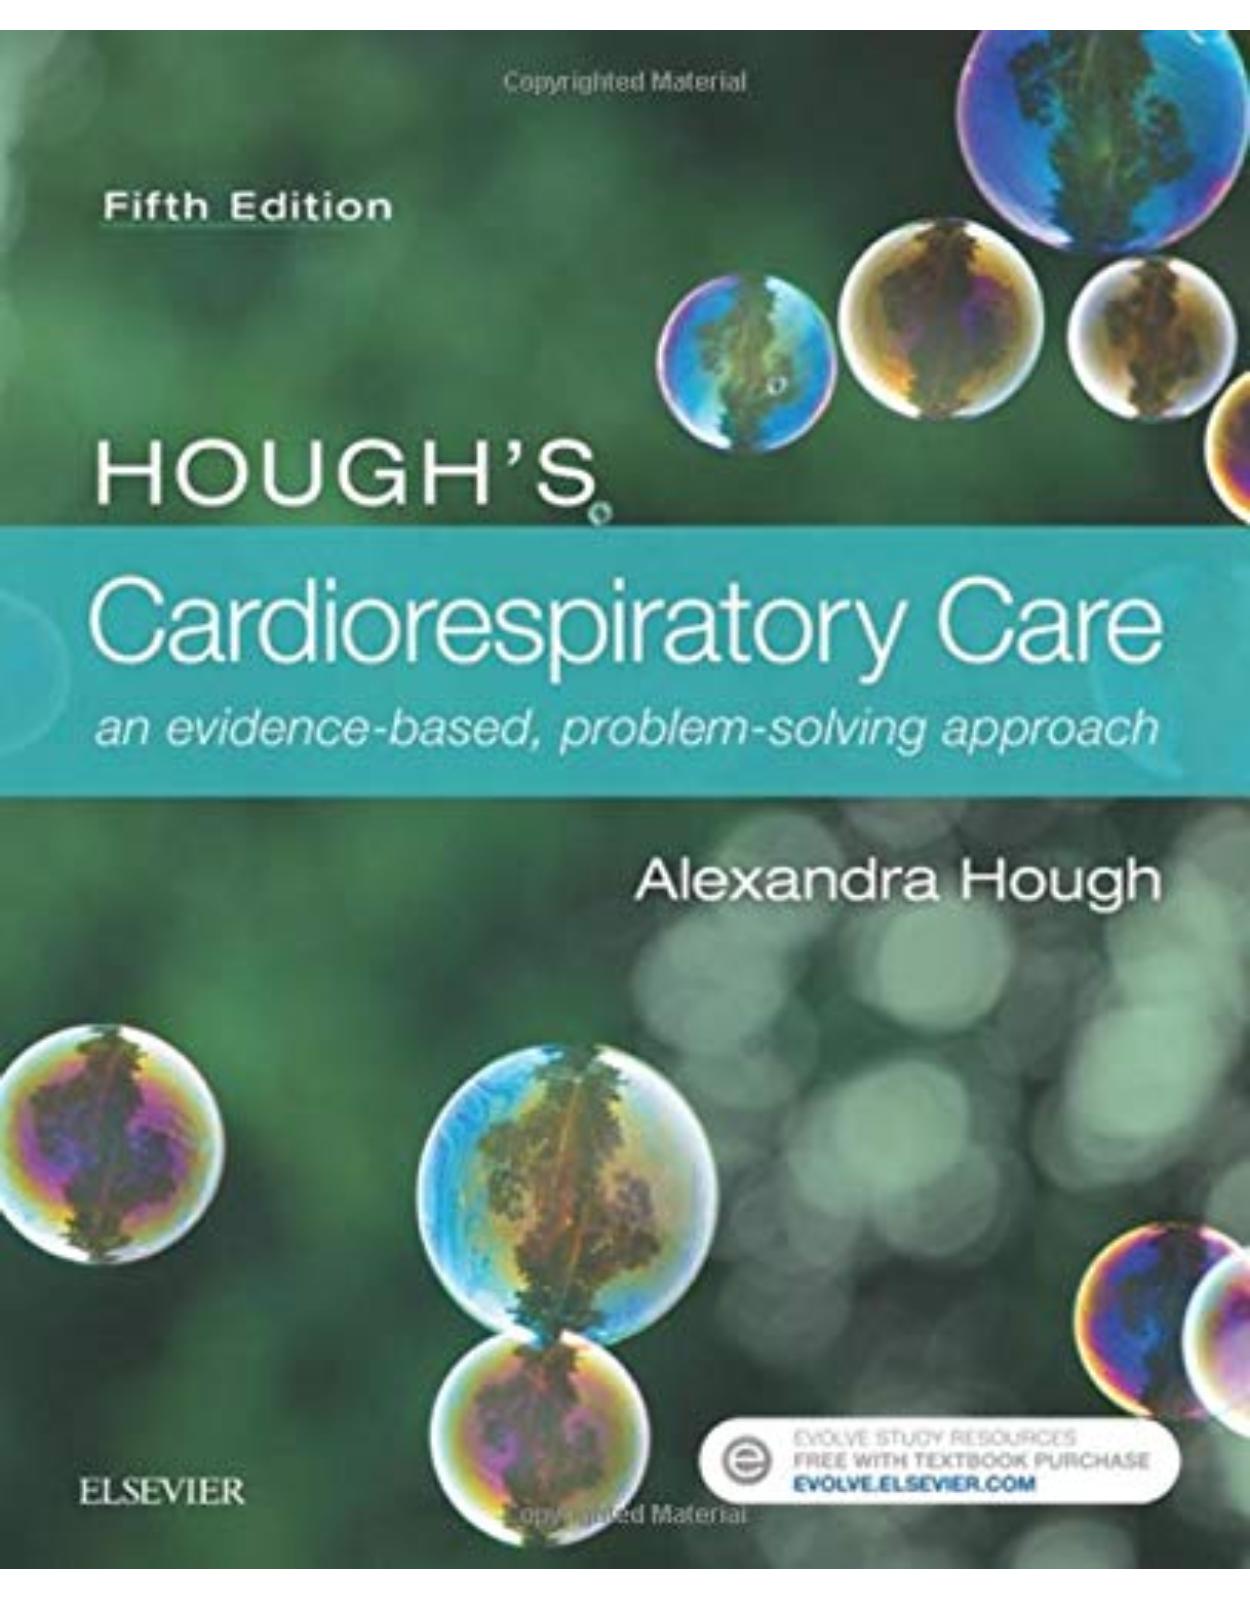 Hough’s Cardiorespiratory Care: an evidence-based, problem-solving approach, 5e